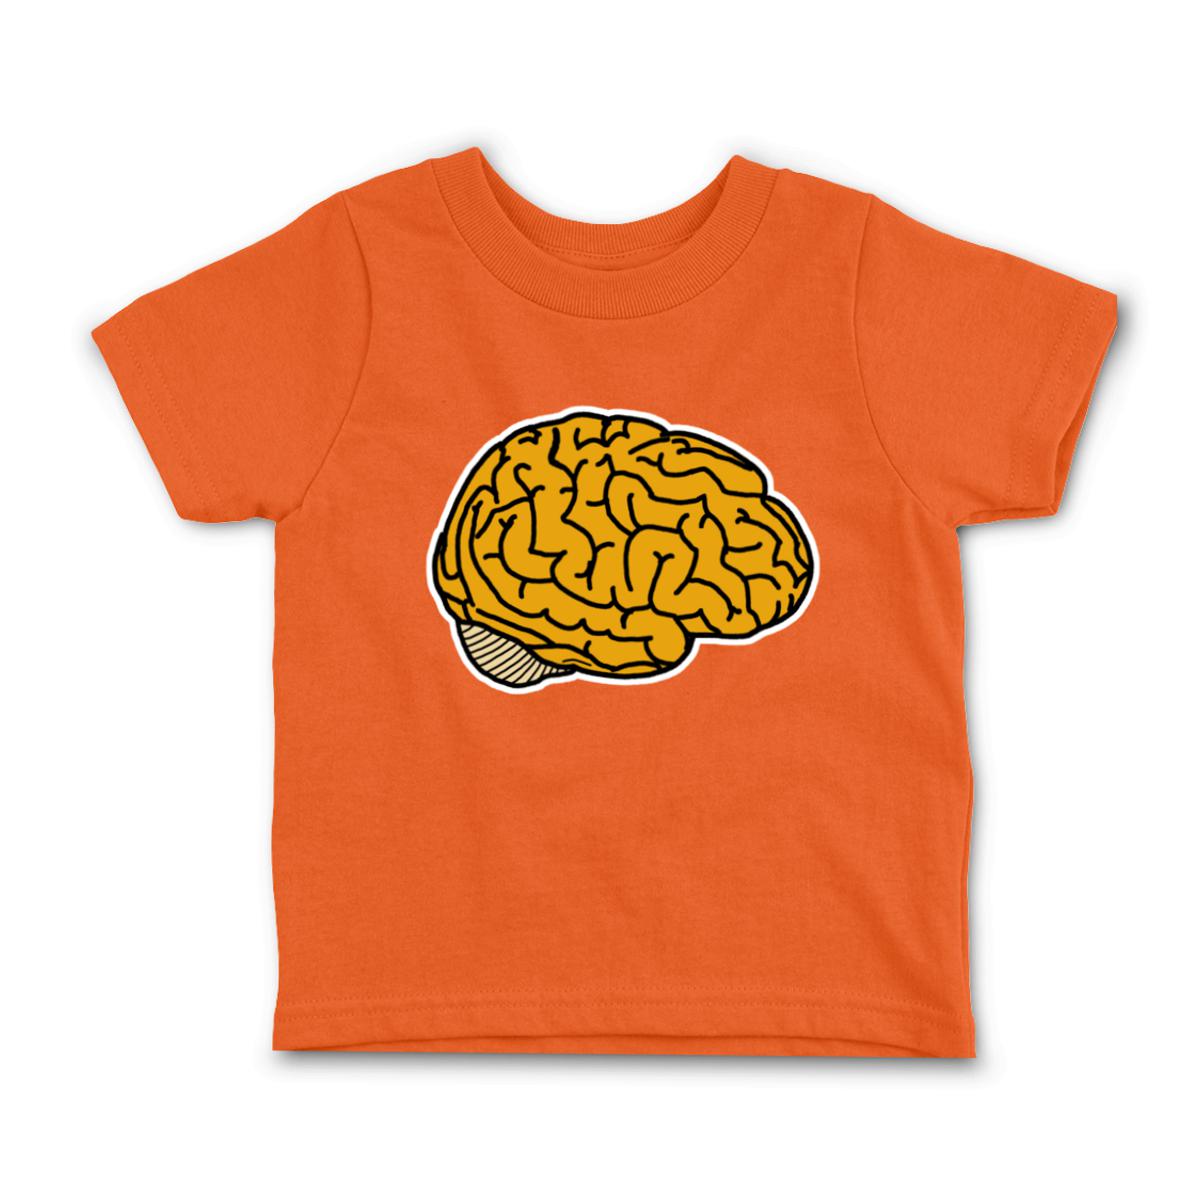 Illustrative Brain Toddler Tee 2T orange